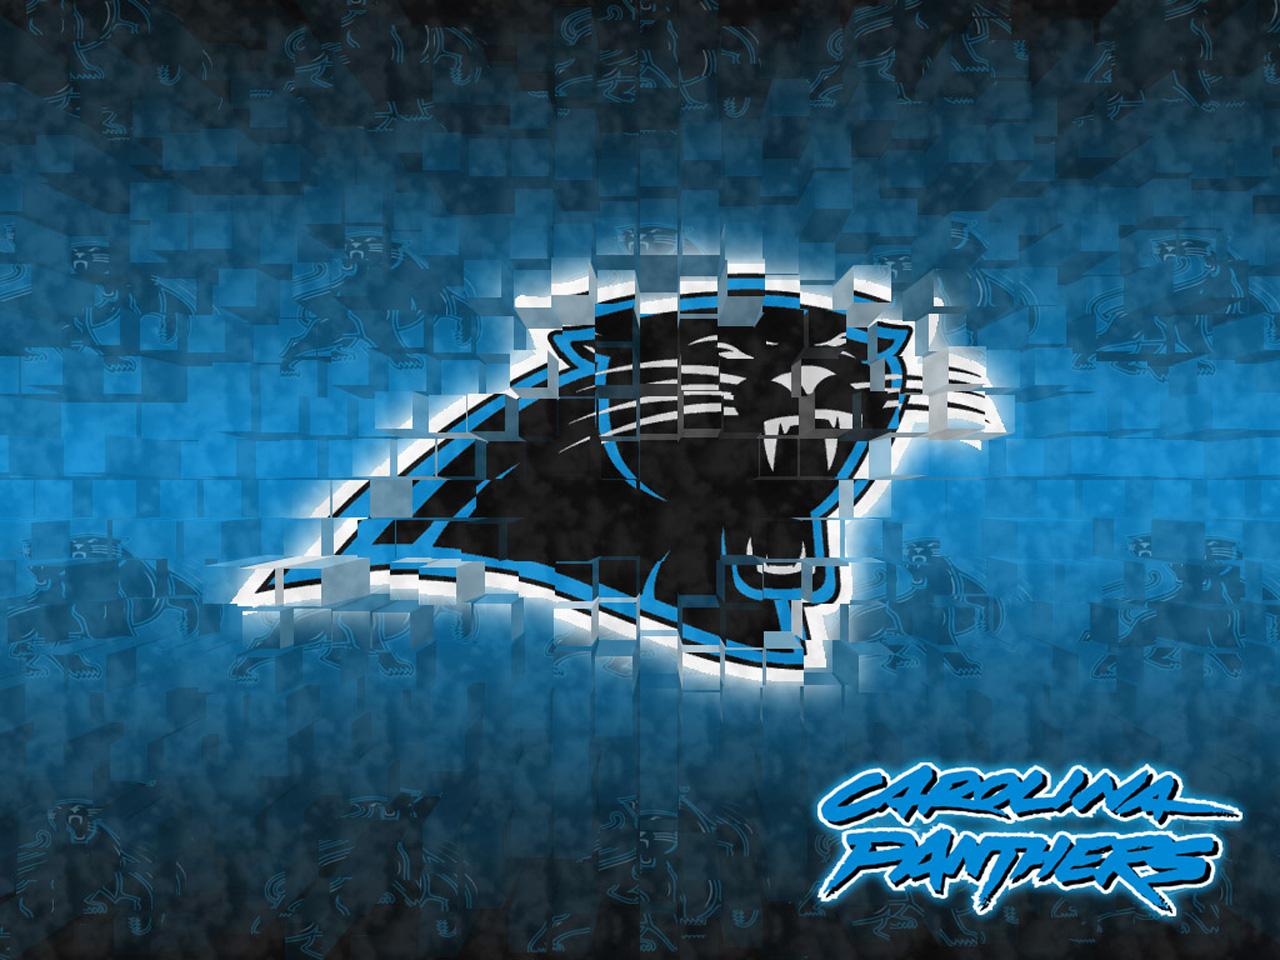 Carolina Panthers Wallpaper and Background Image